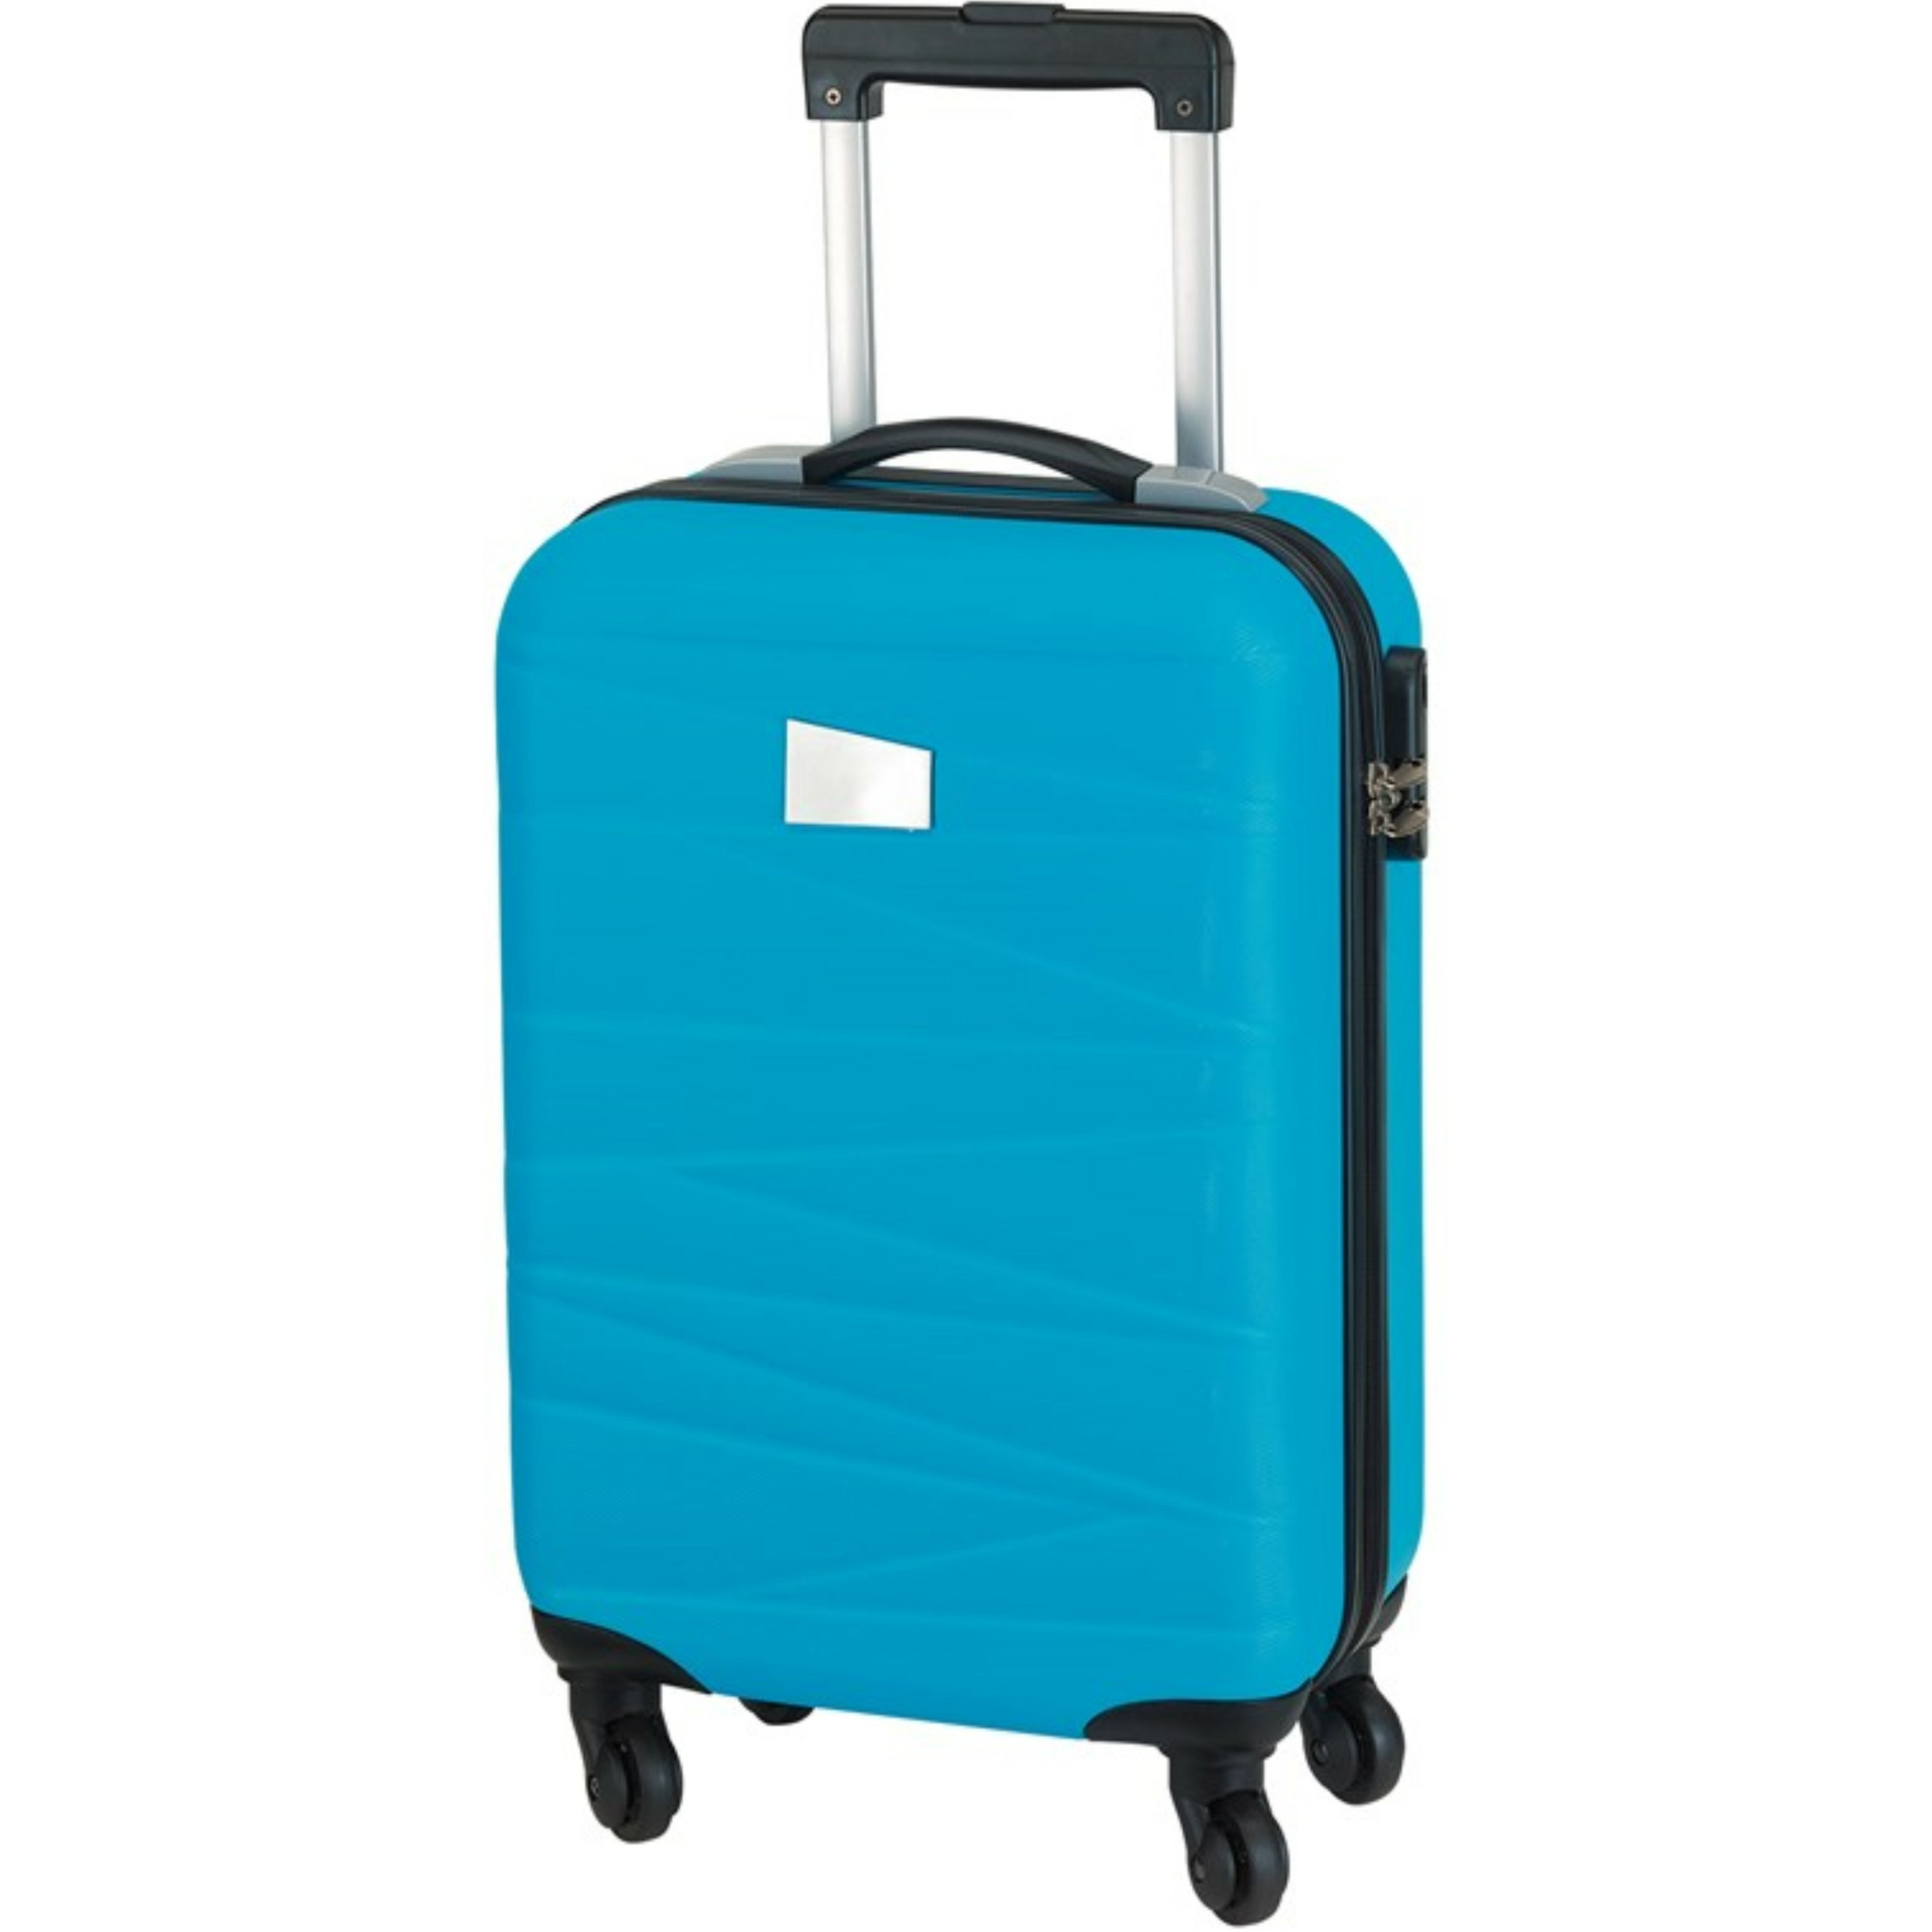 Cabine handbagage reis trolley koffer met zwenkwielen 55 x 35 x 20 cm hemelblauw